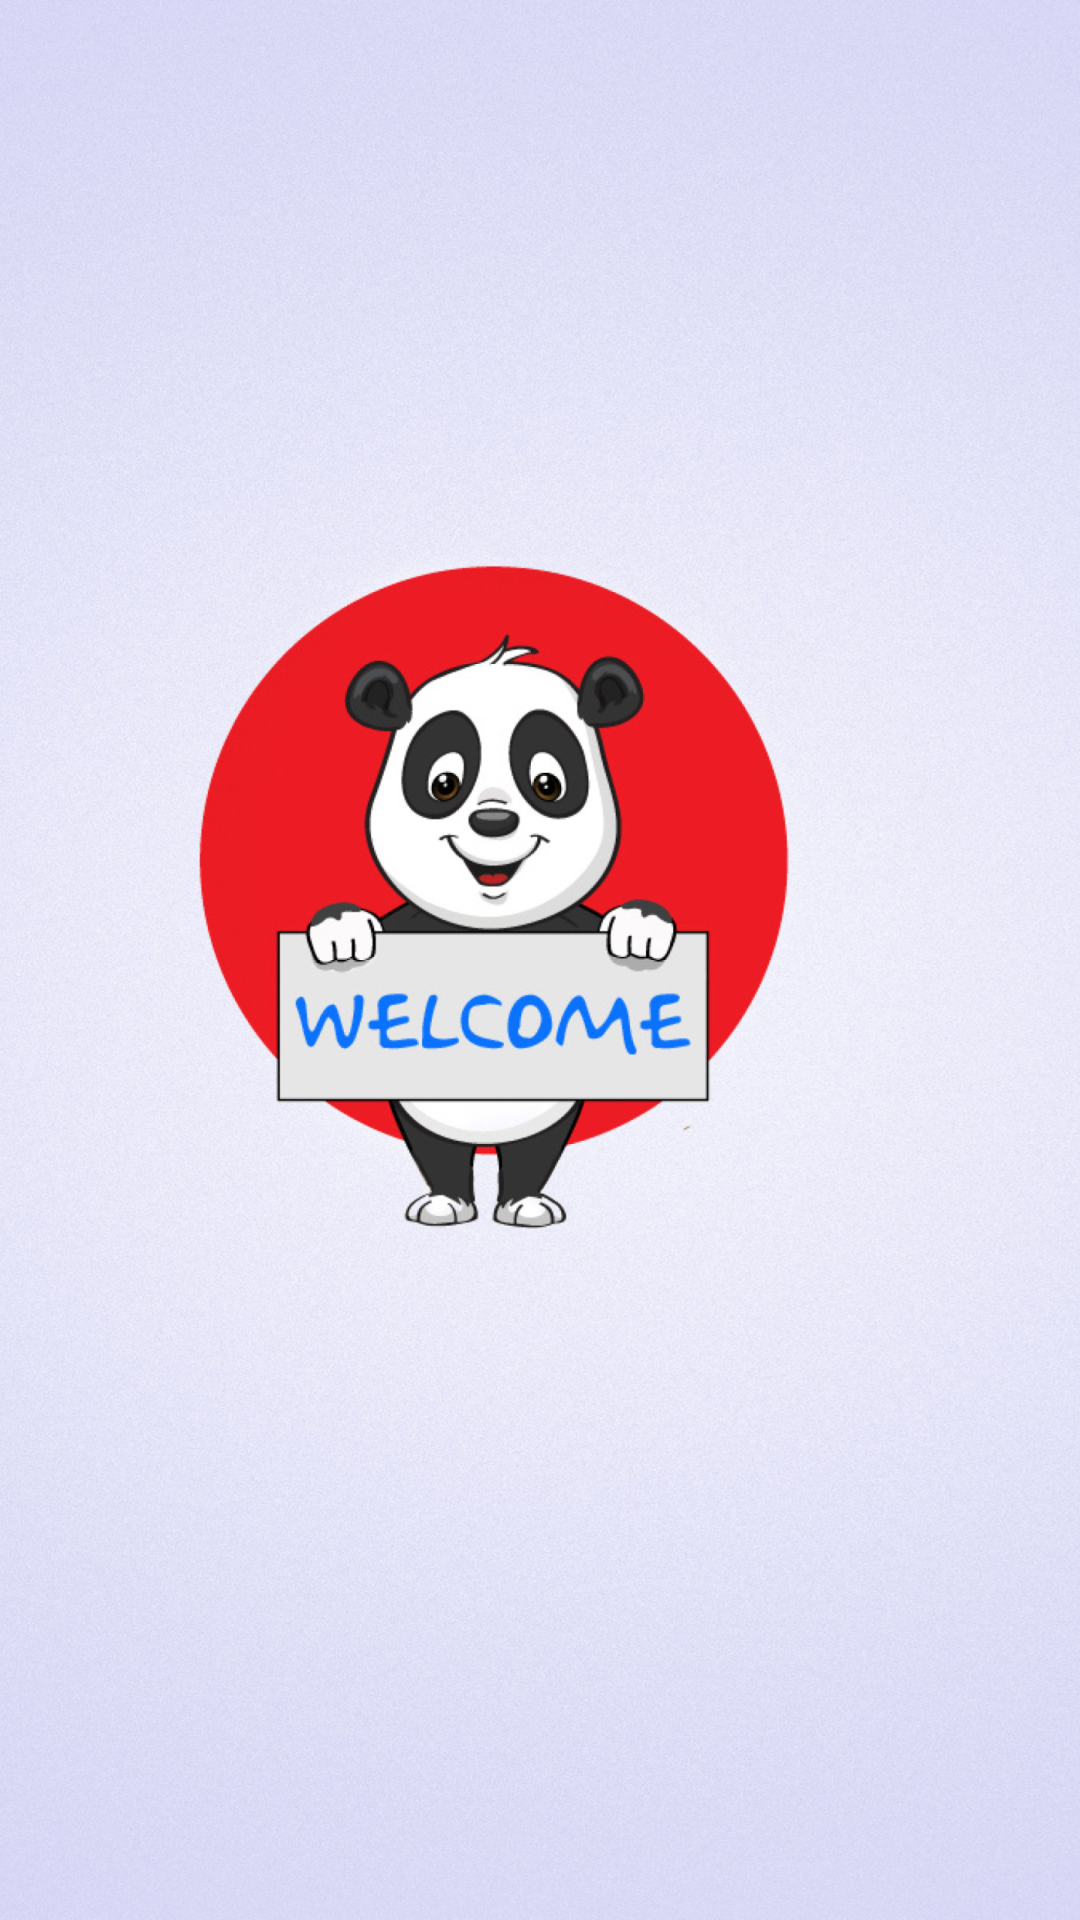 Welcome Panda wallpaper 1080x1920